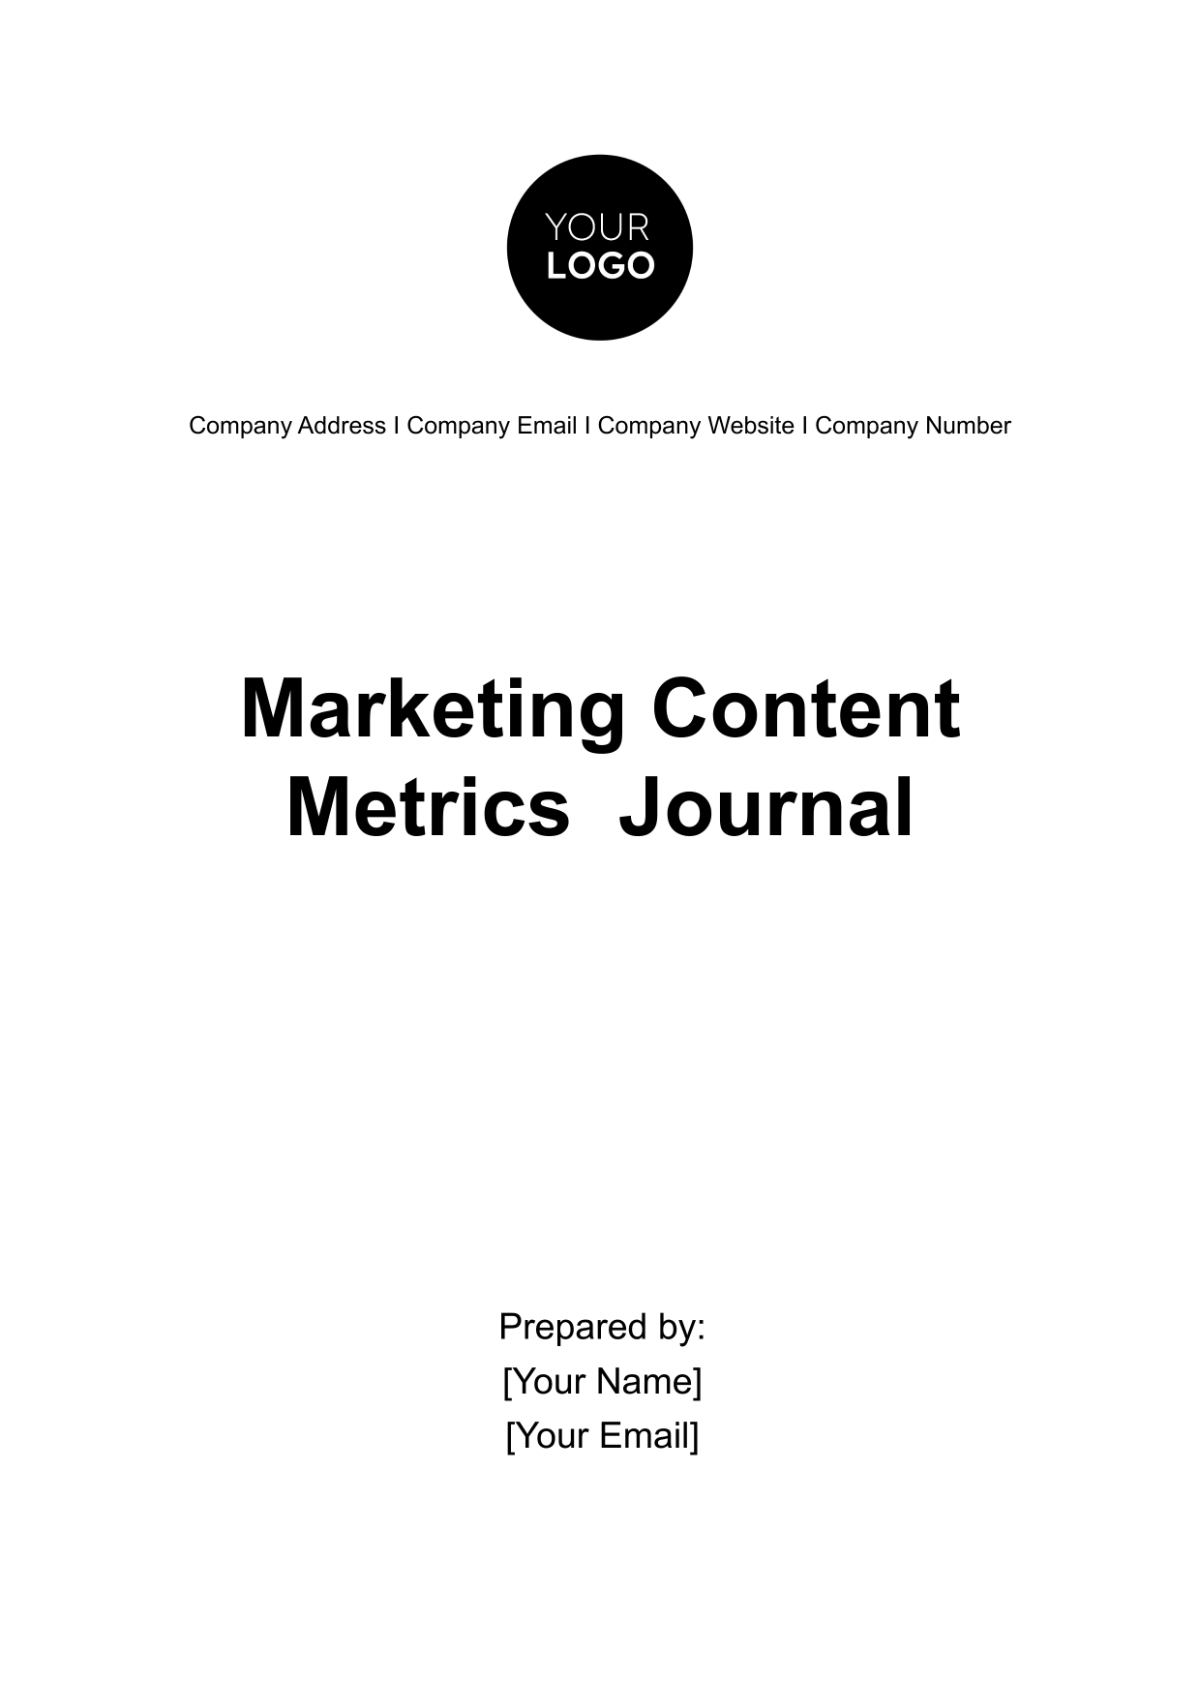 Free Marketing Content Metrics Journal Template